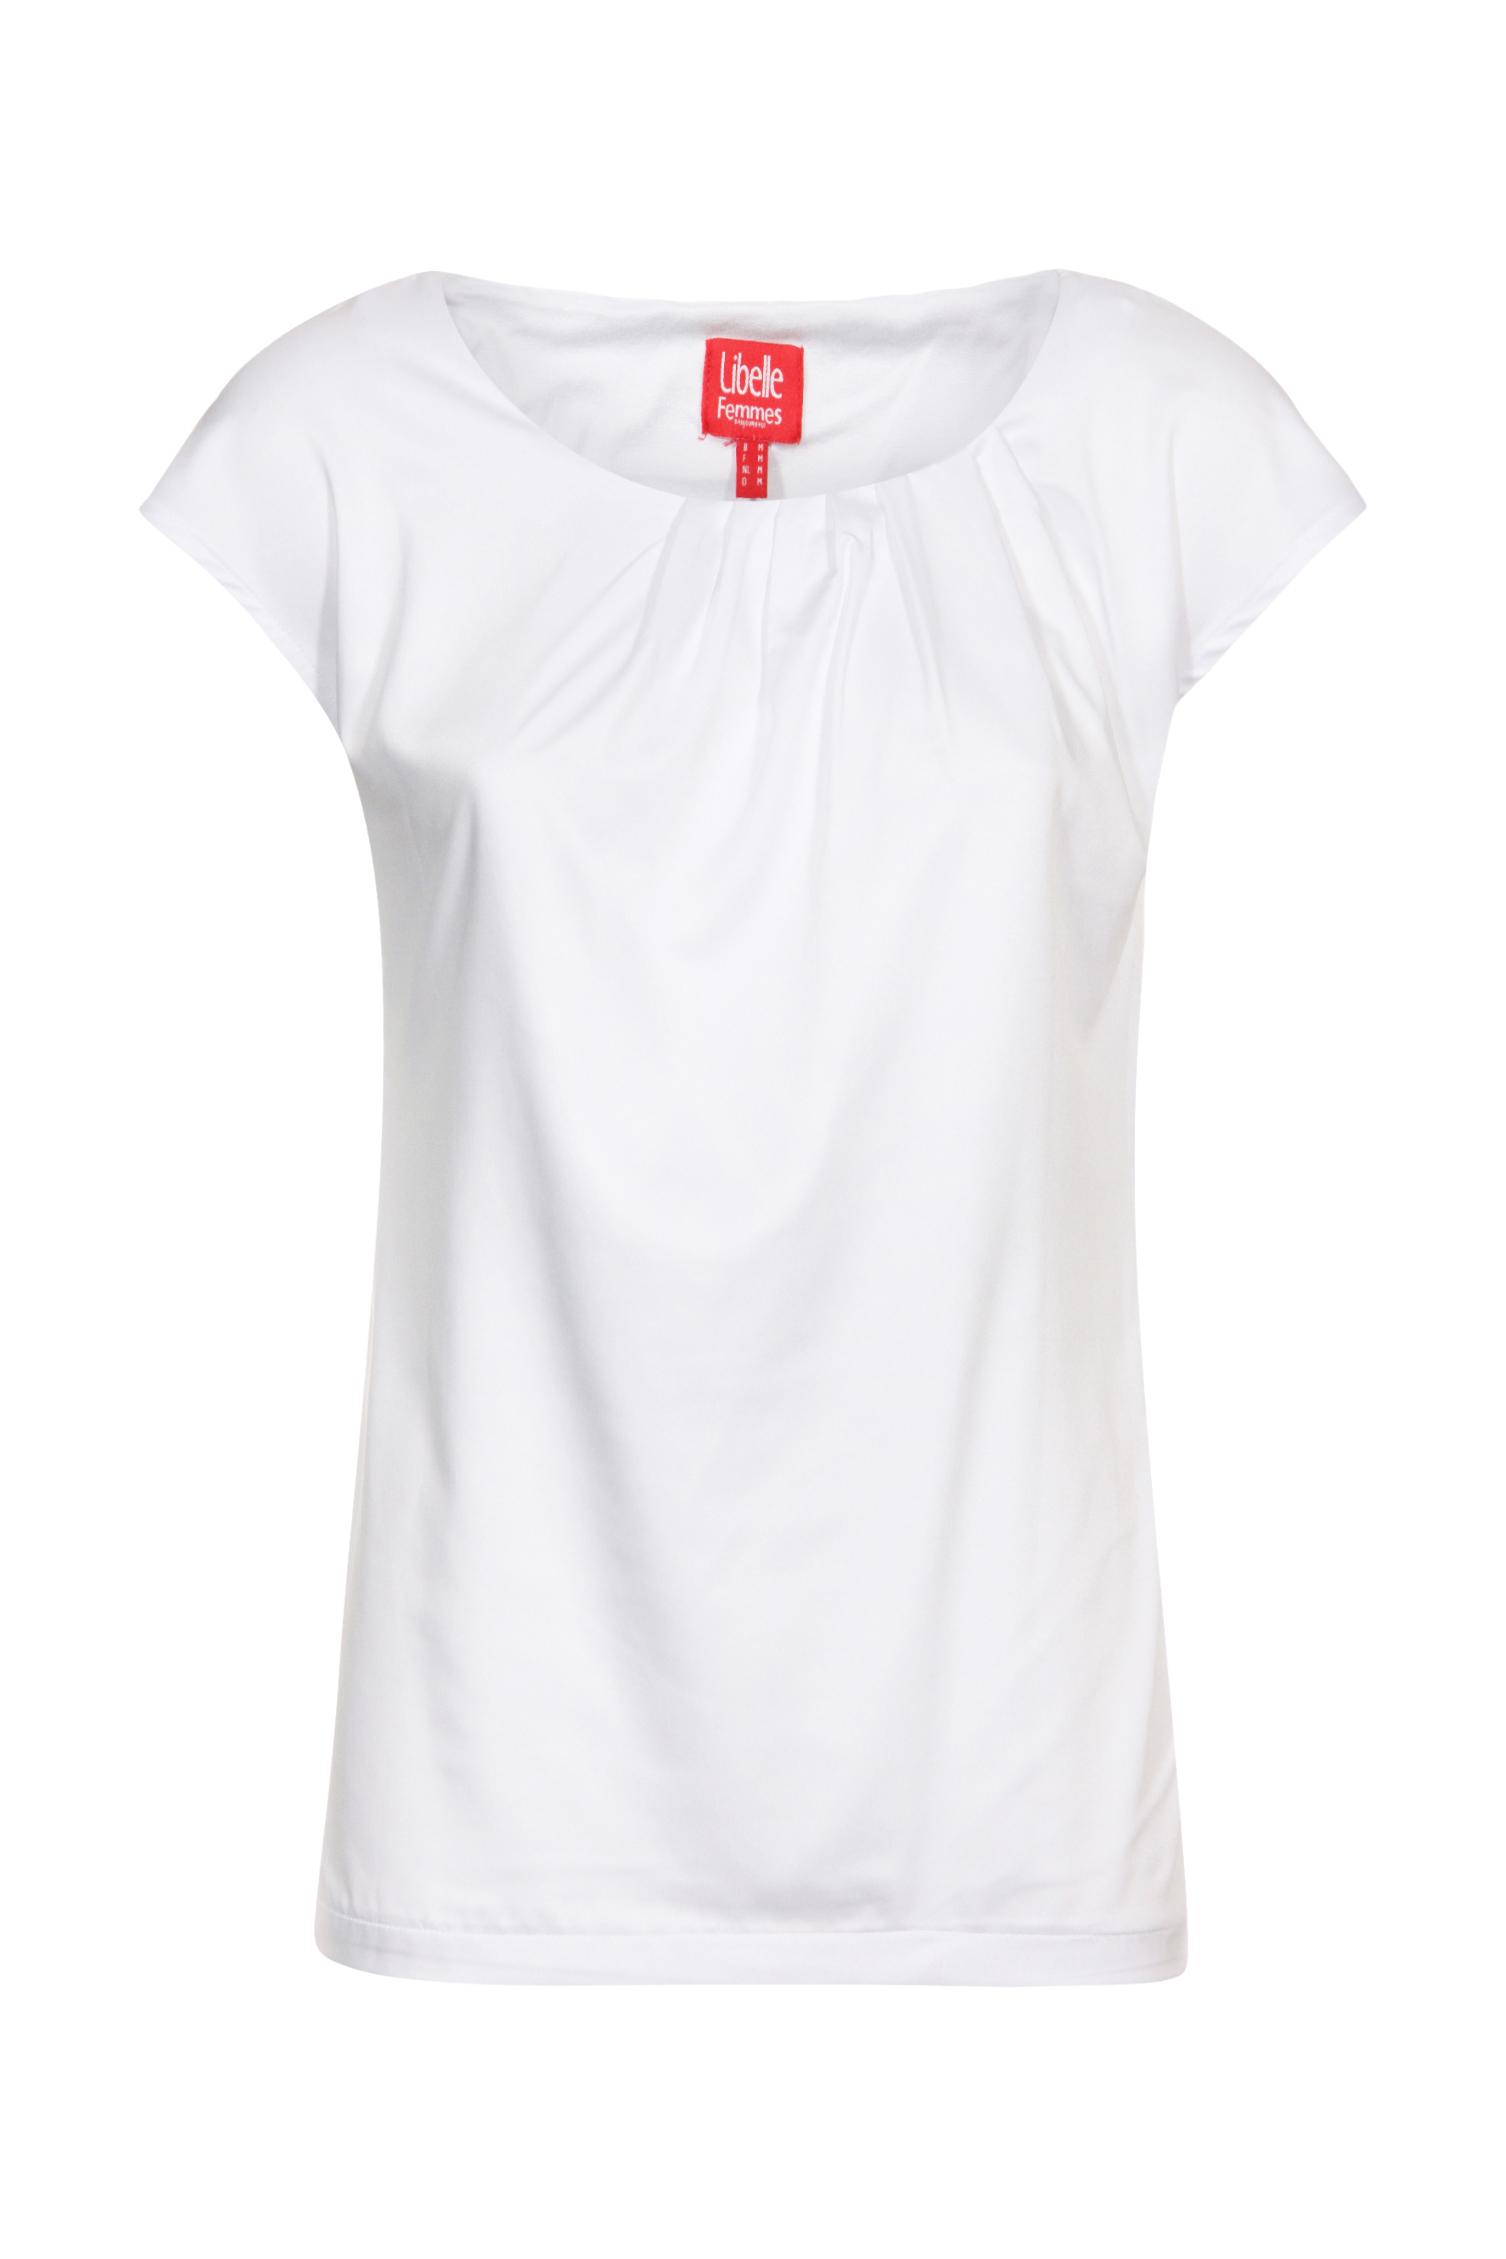 T-shirt blanc - 29,95€